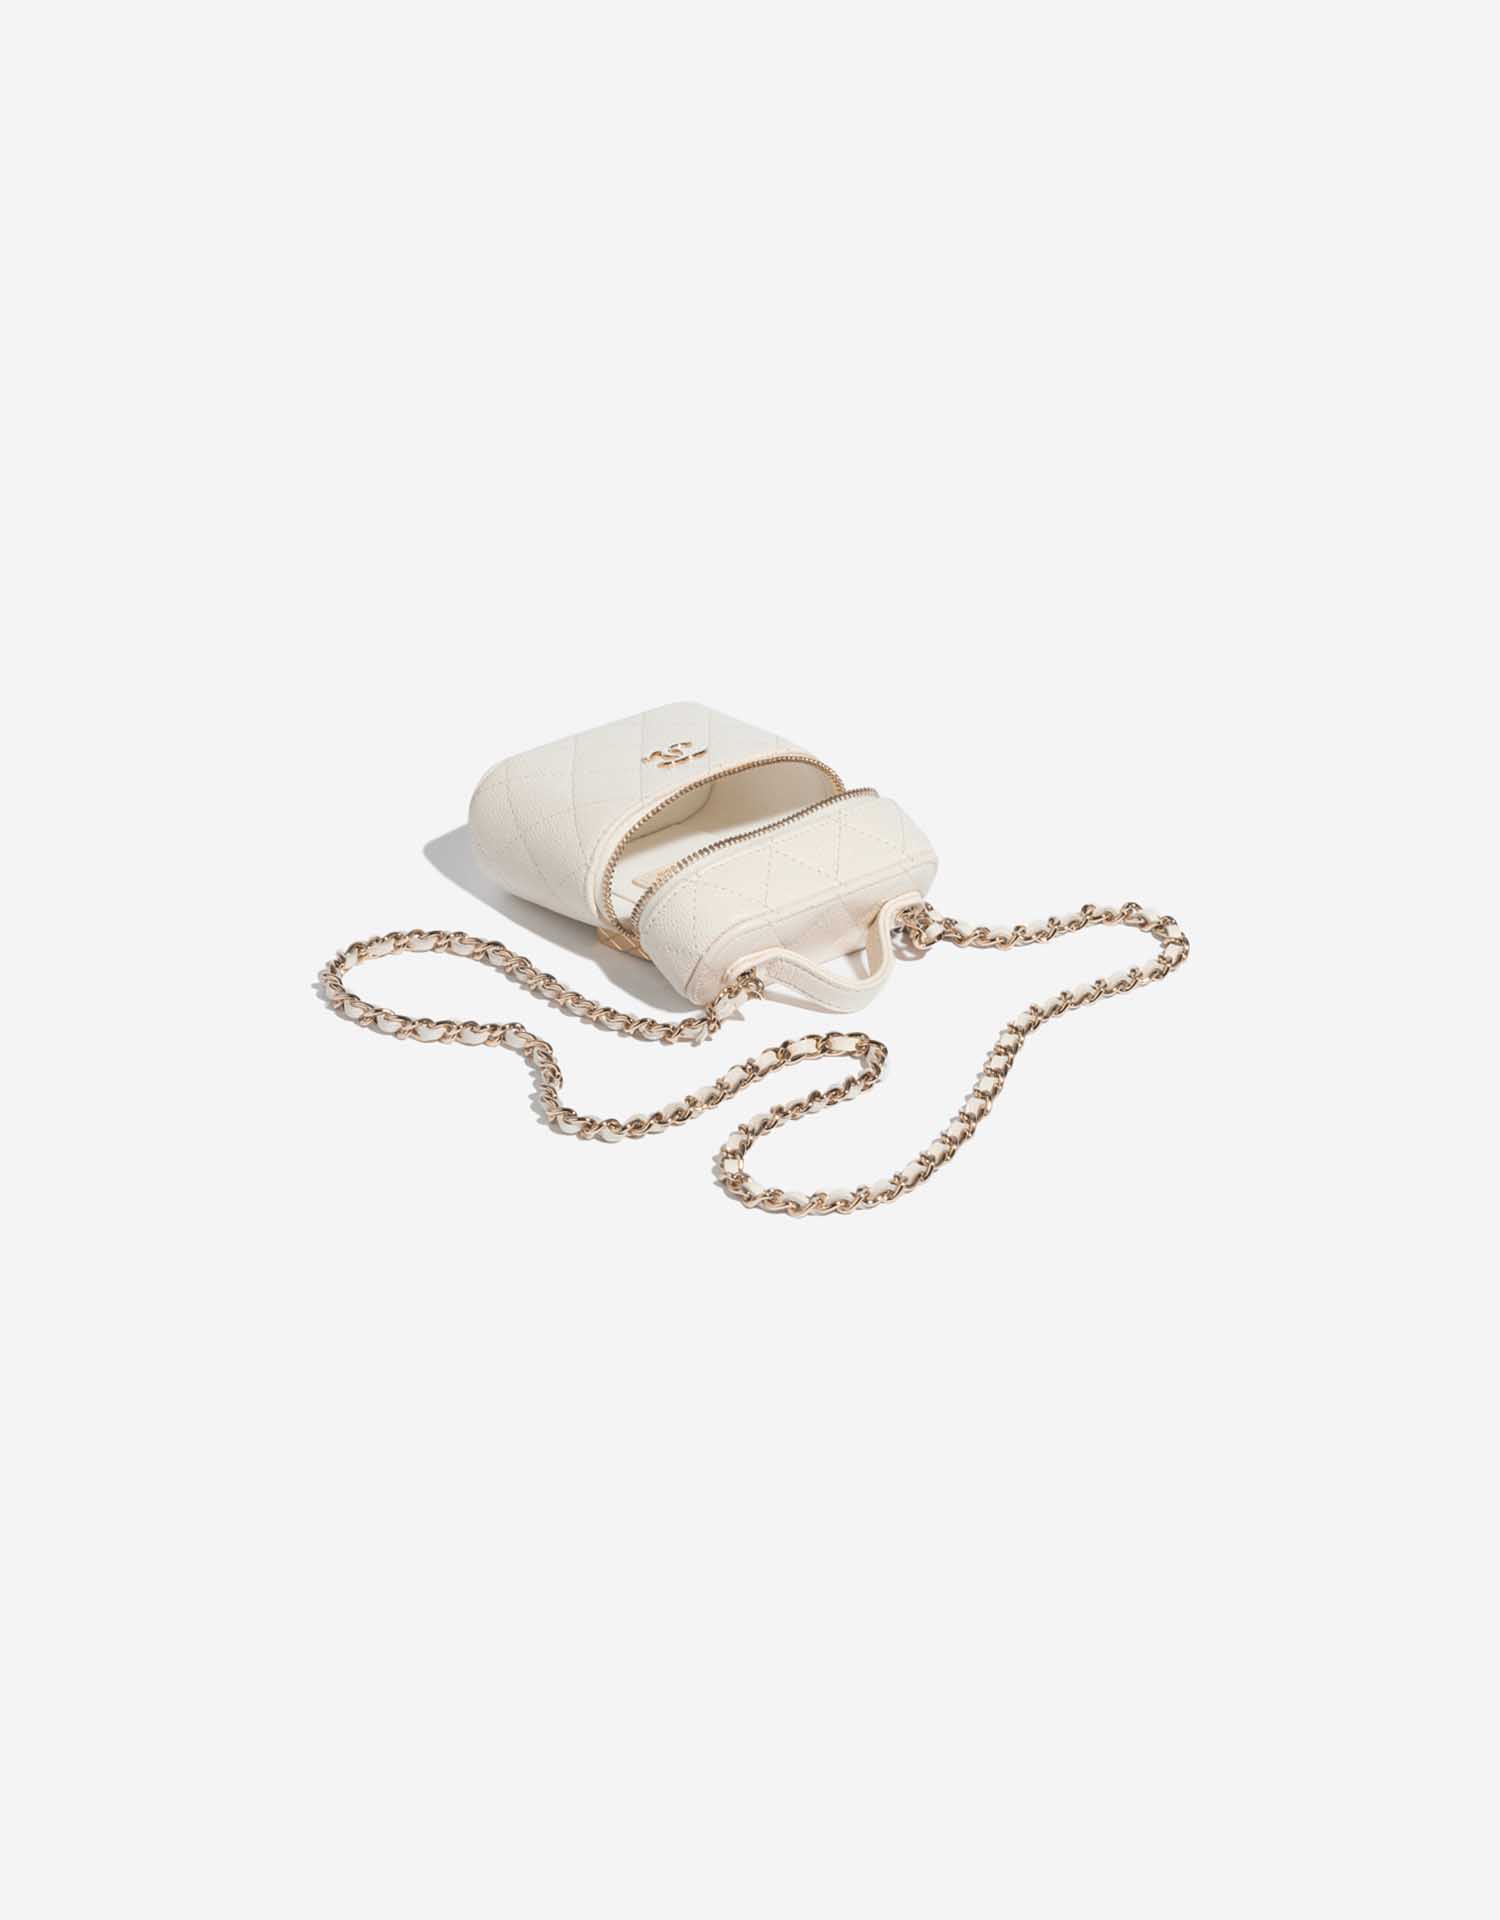 Pre-owned Chanel bag Vanity Mini Caviar White White Inside | Sell your designer bag on Saclab.com